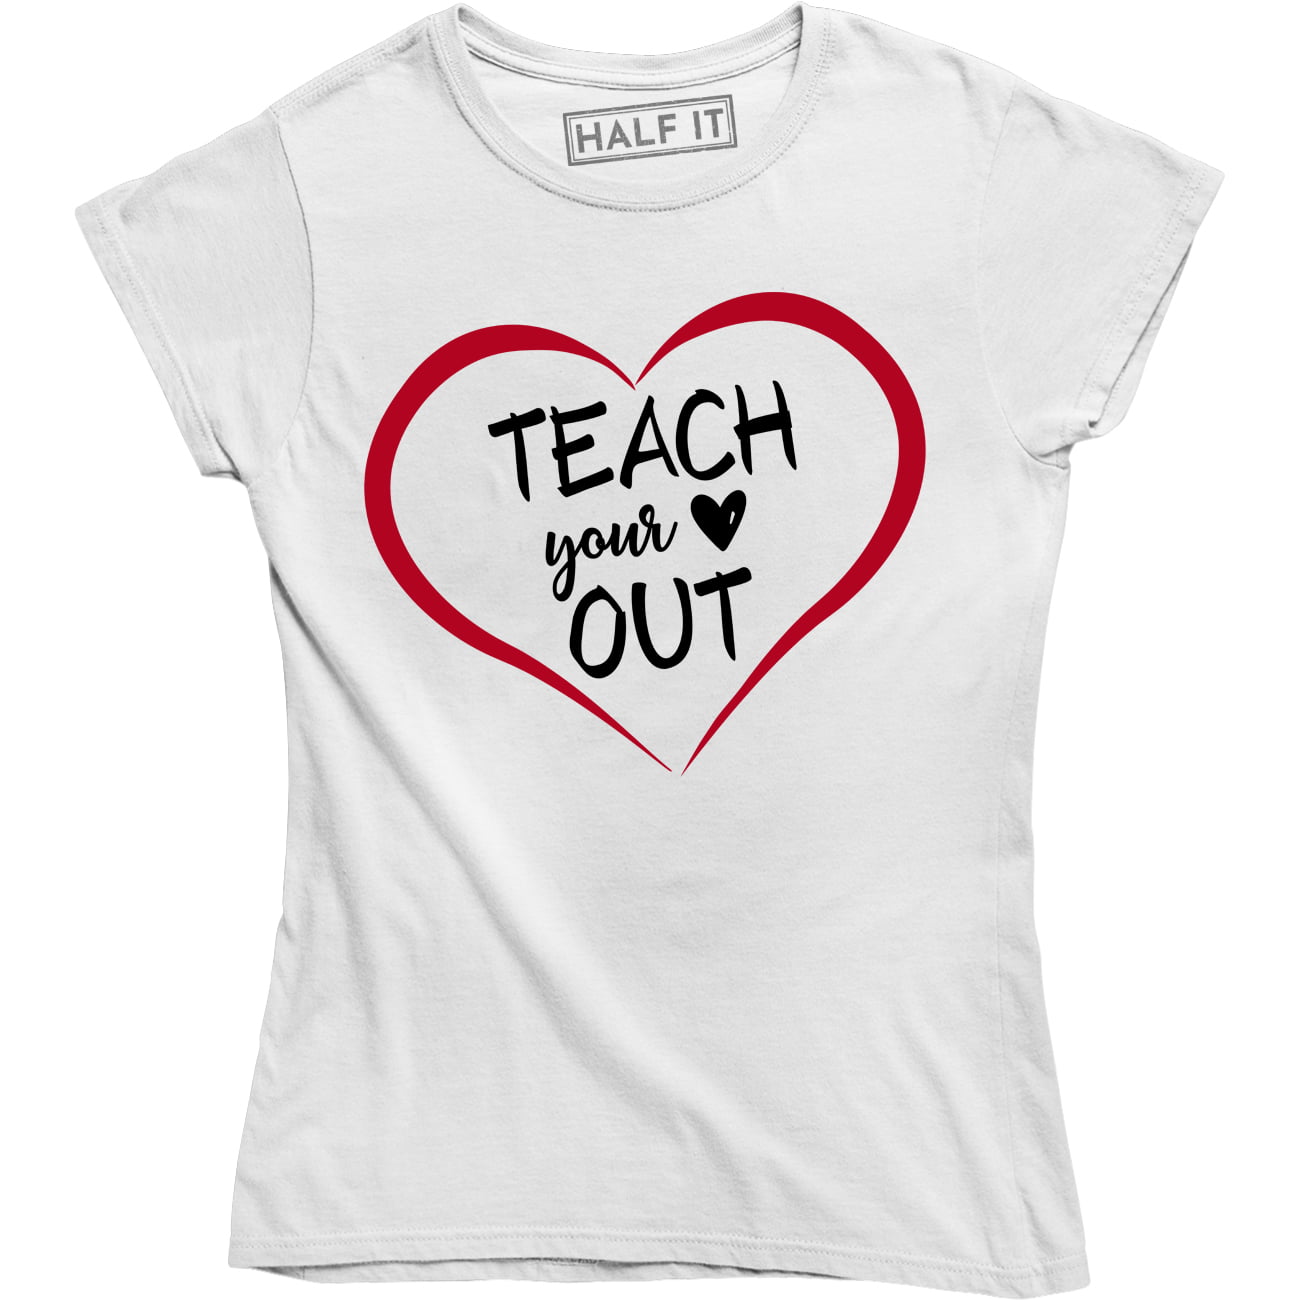 Anniversary Shirts for teachers Christmas shirt for teacher One Merry teacher shirt for valentines